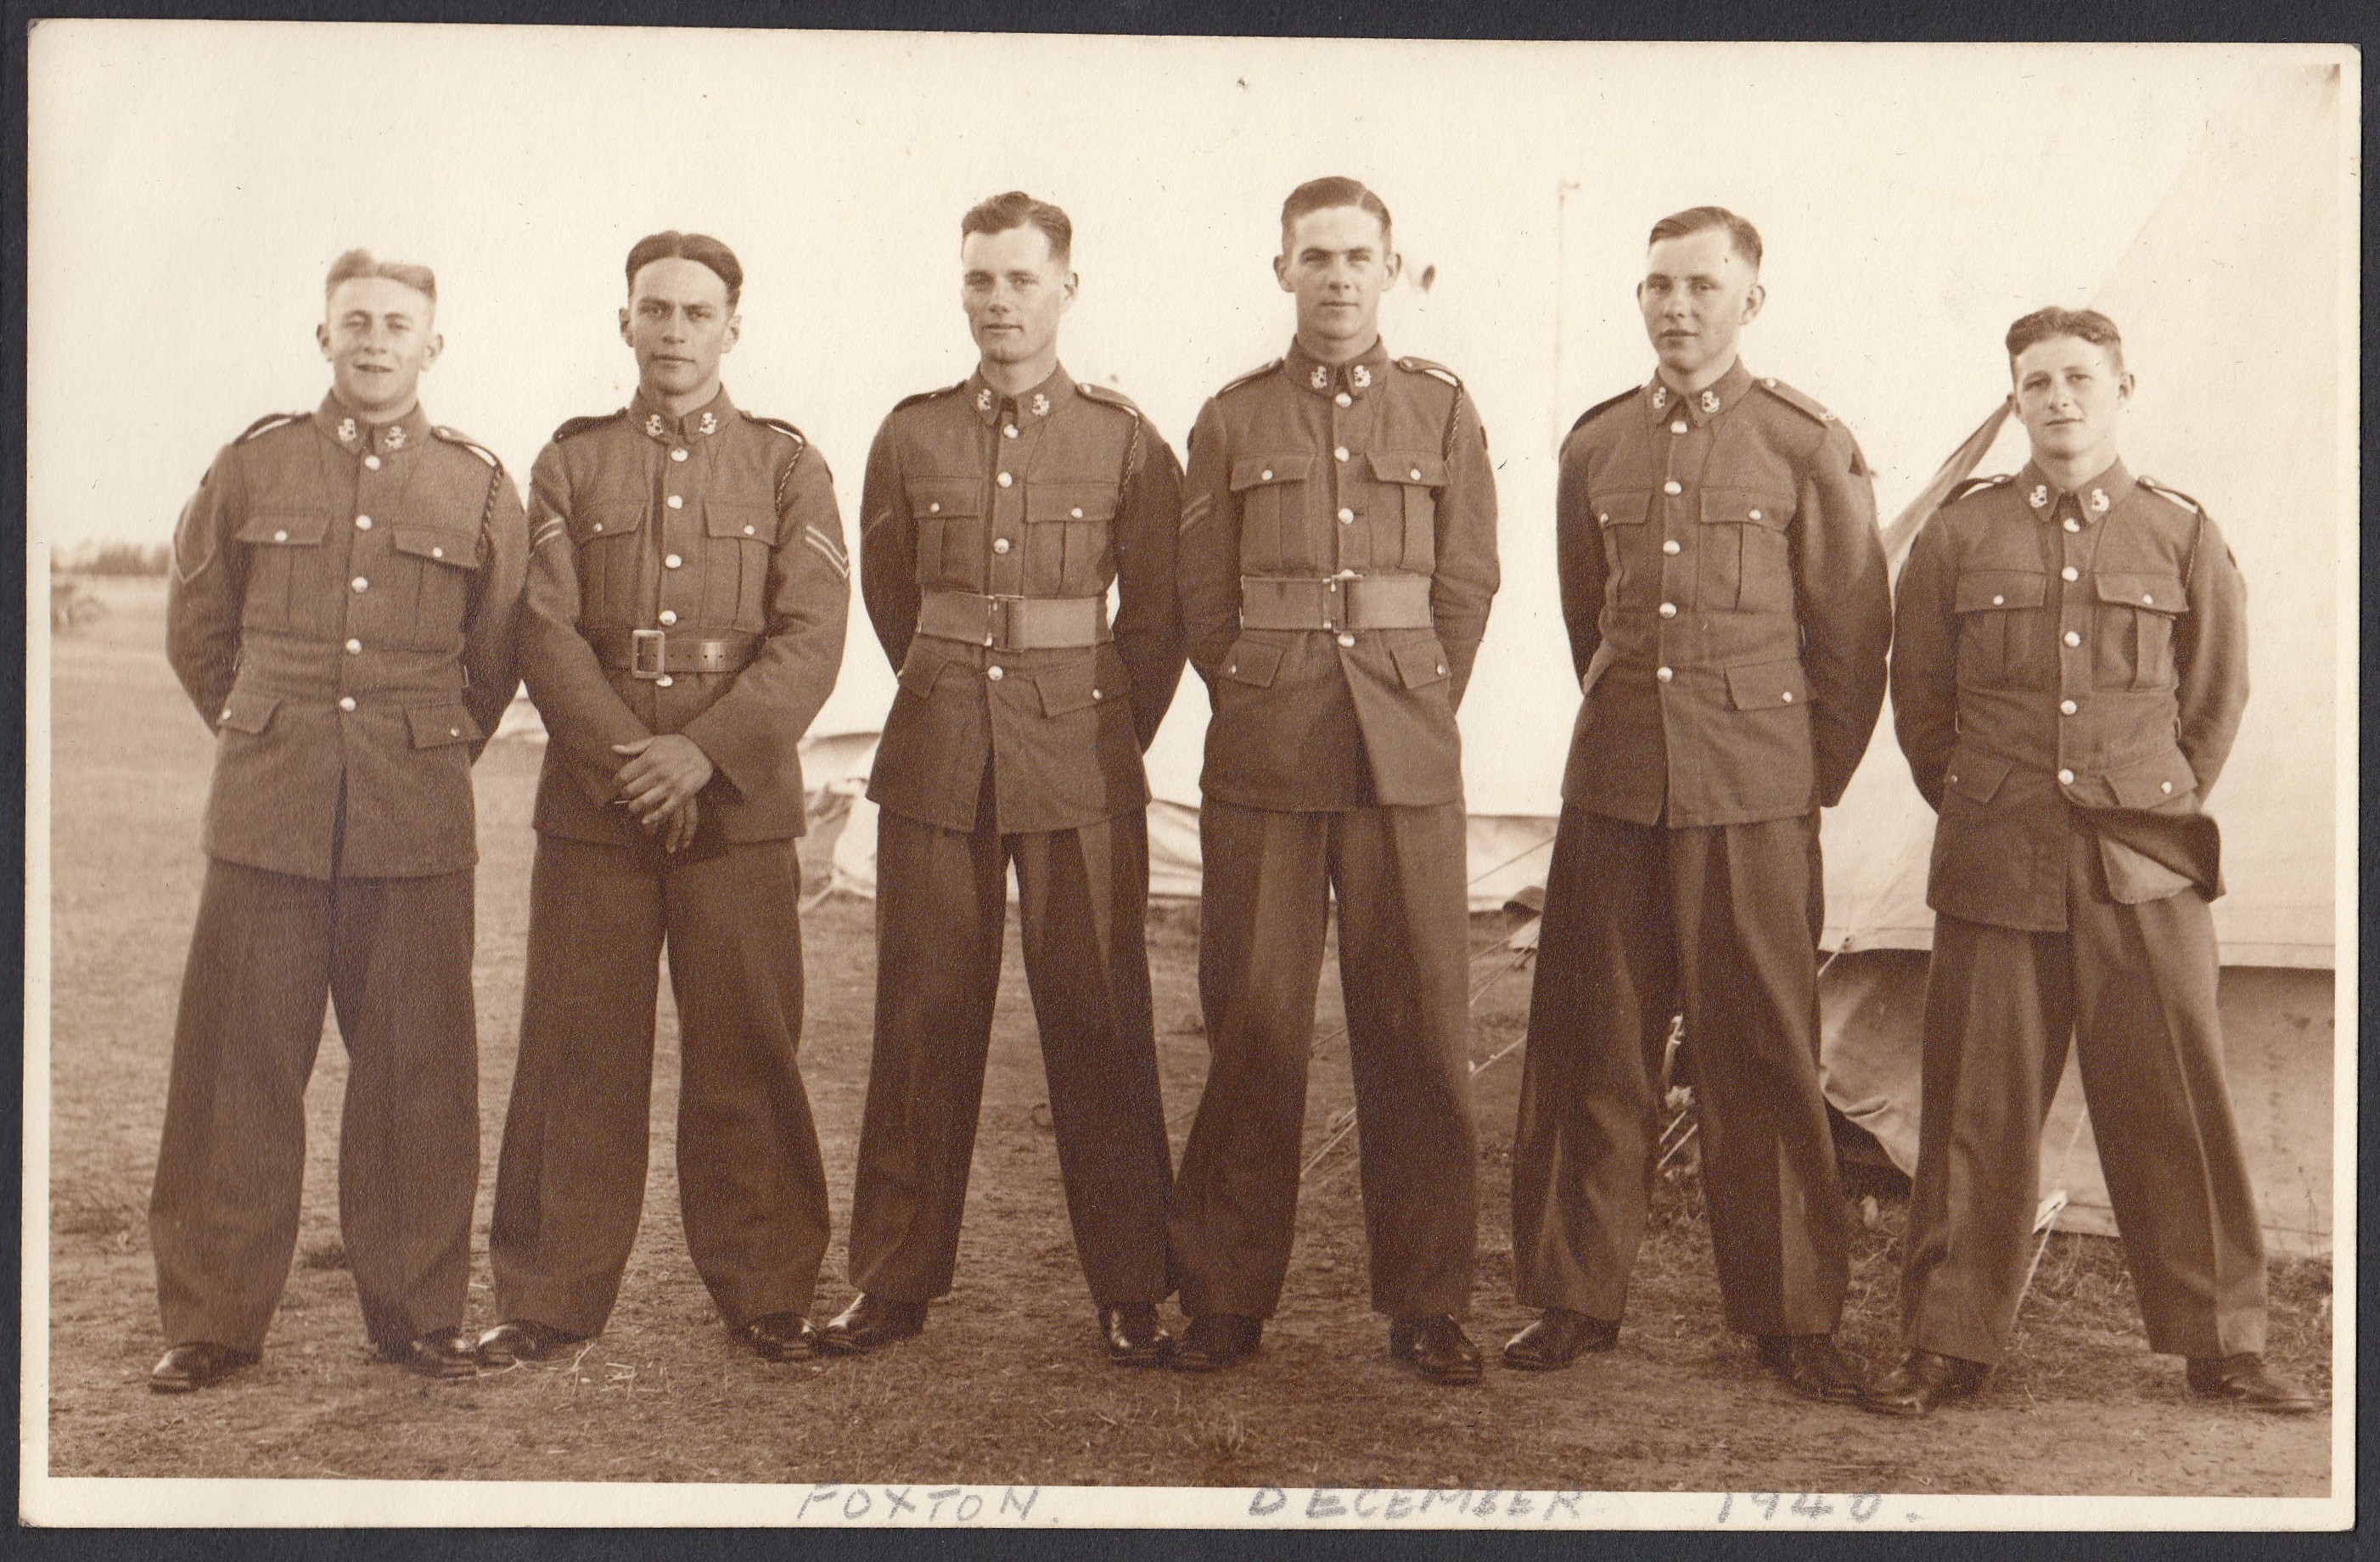 NCOs, Foxton December 1940, Jum the tallest man in the line